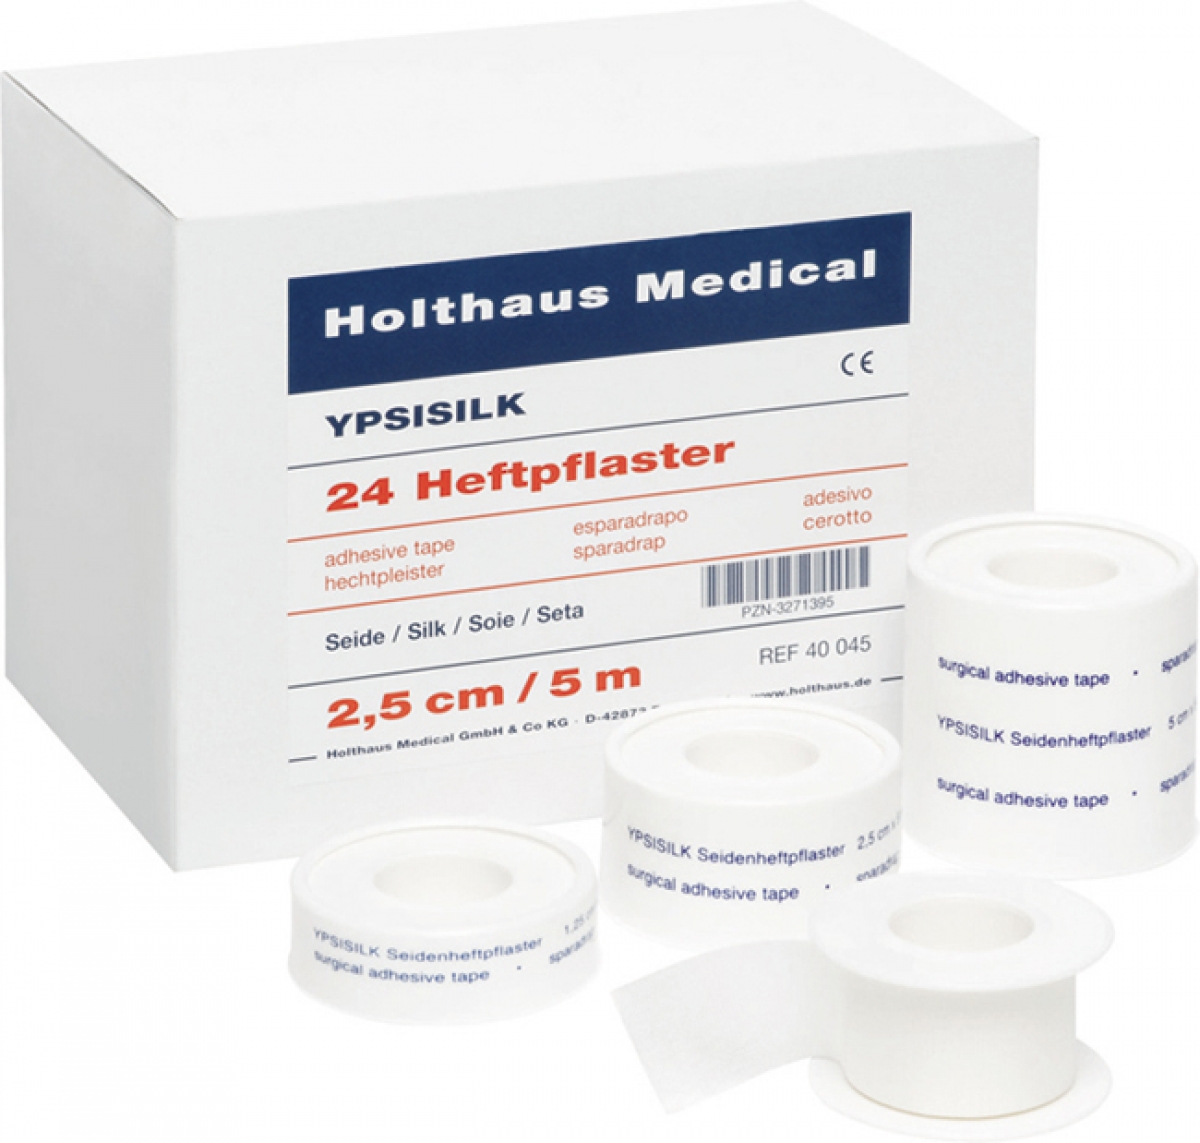 Holthaus Medical, Erste-Hilfe, YPSISILK Heftpflaster , 2,5cmx9,14m